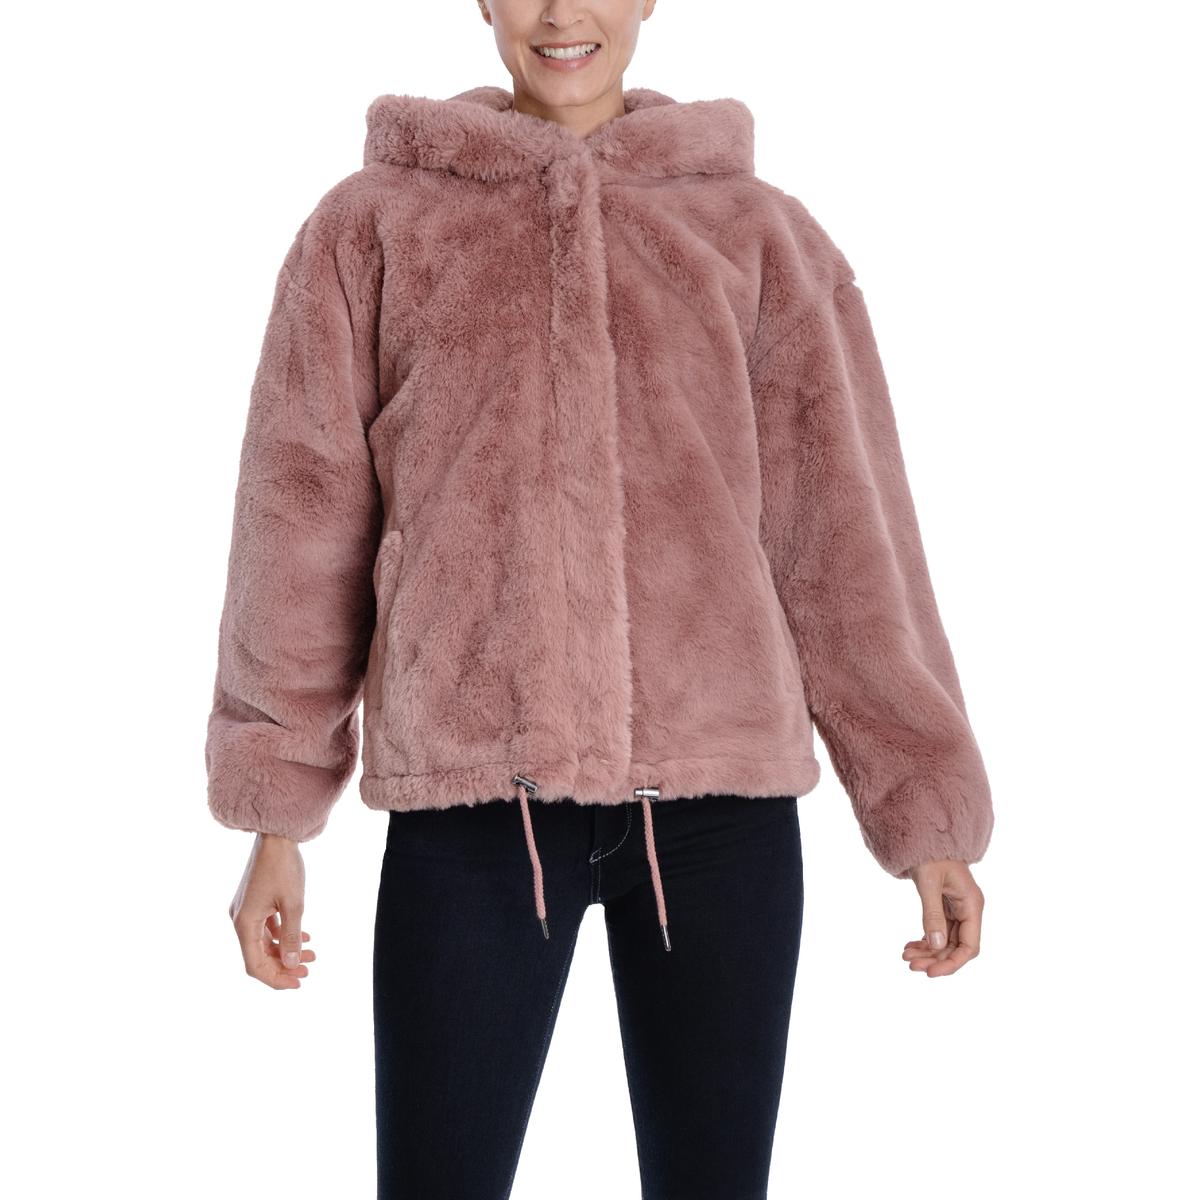 Lucky Brand Faux Fur Black coat Teddy Bear Plush Hooded women’s XL NWT